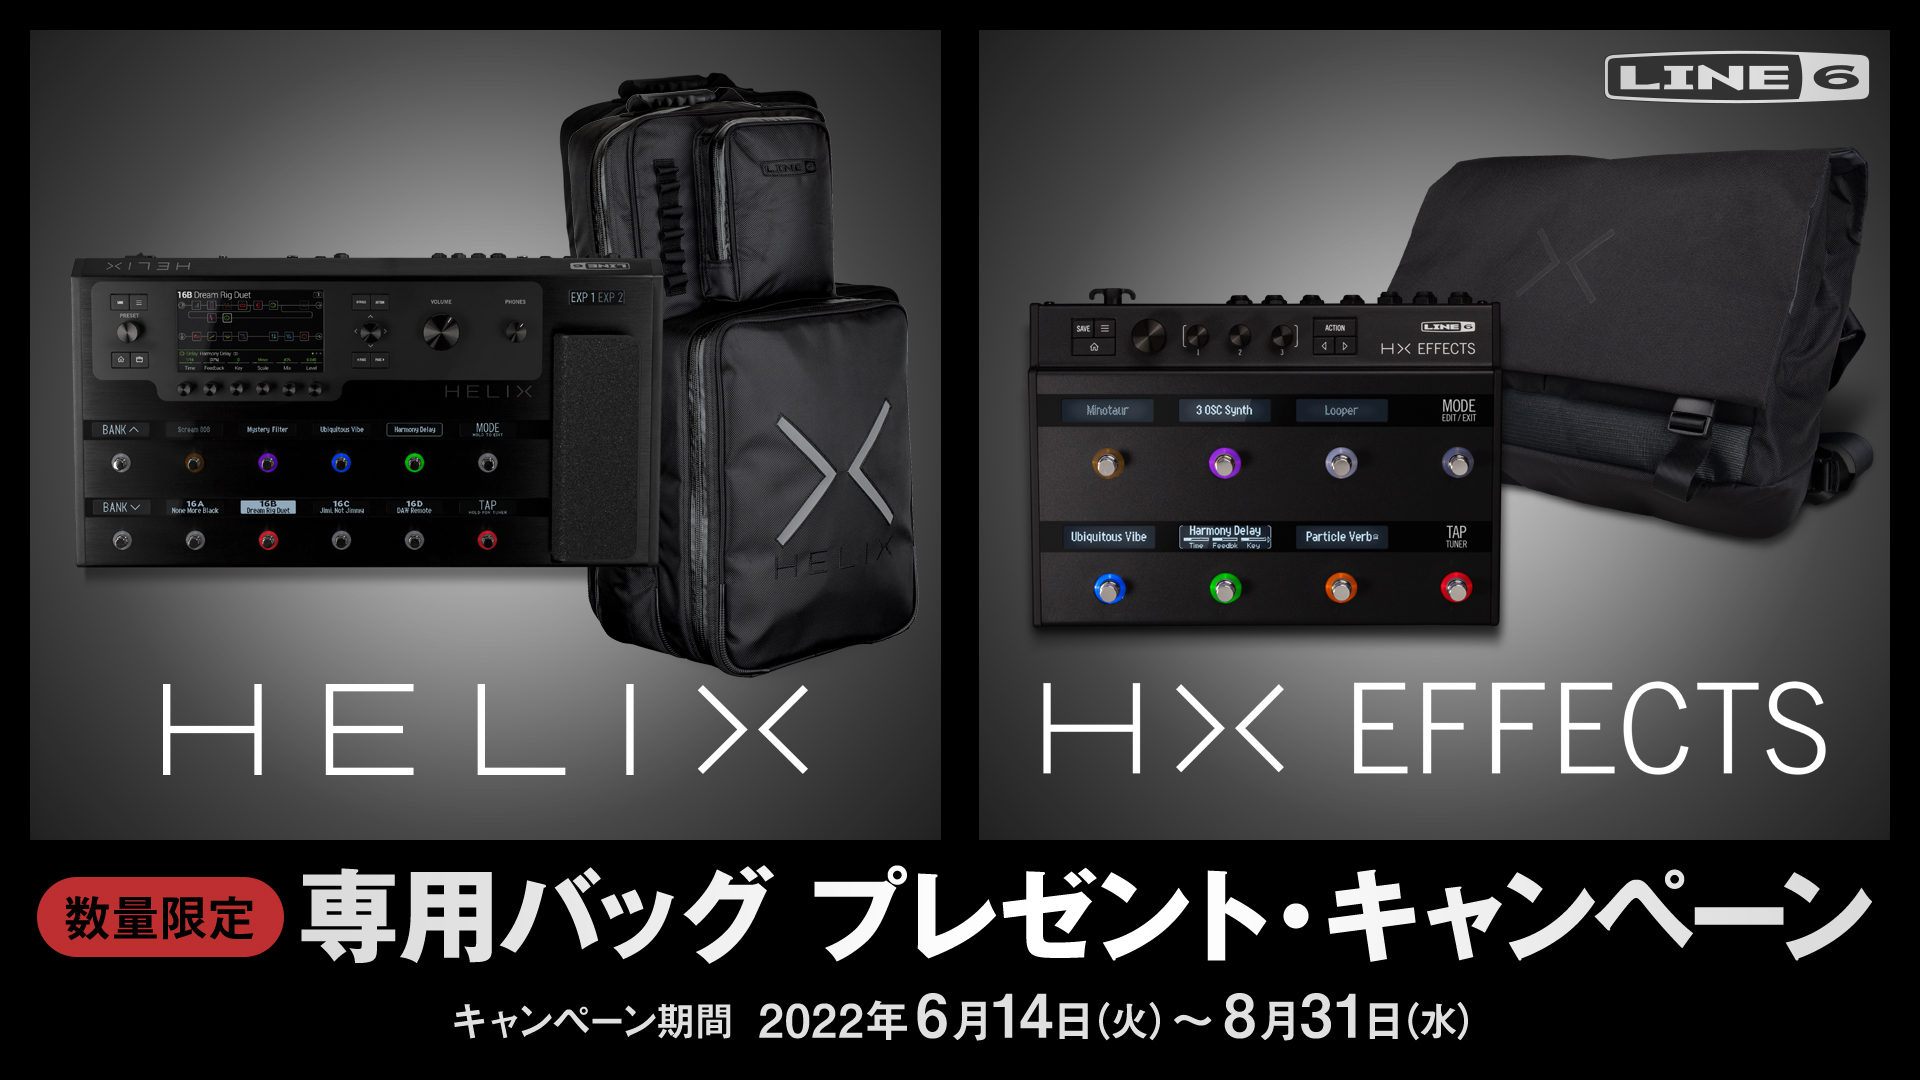 Helix、HX Effects購入者対象 専用バッグプレゼント・キャンペーン